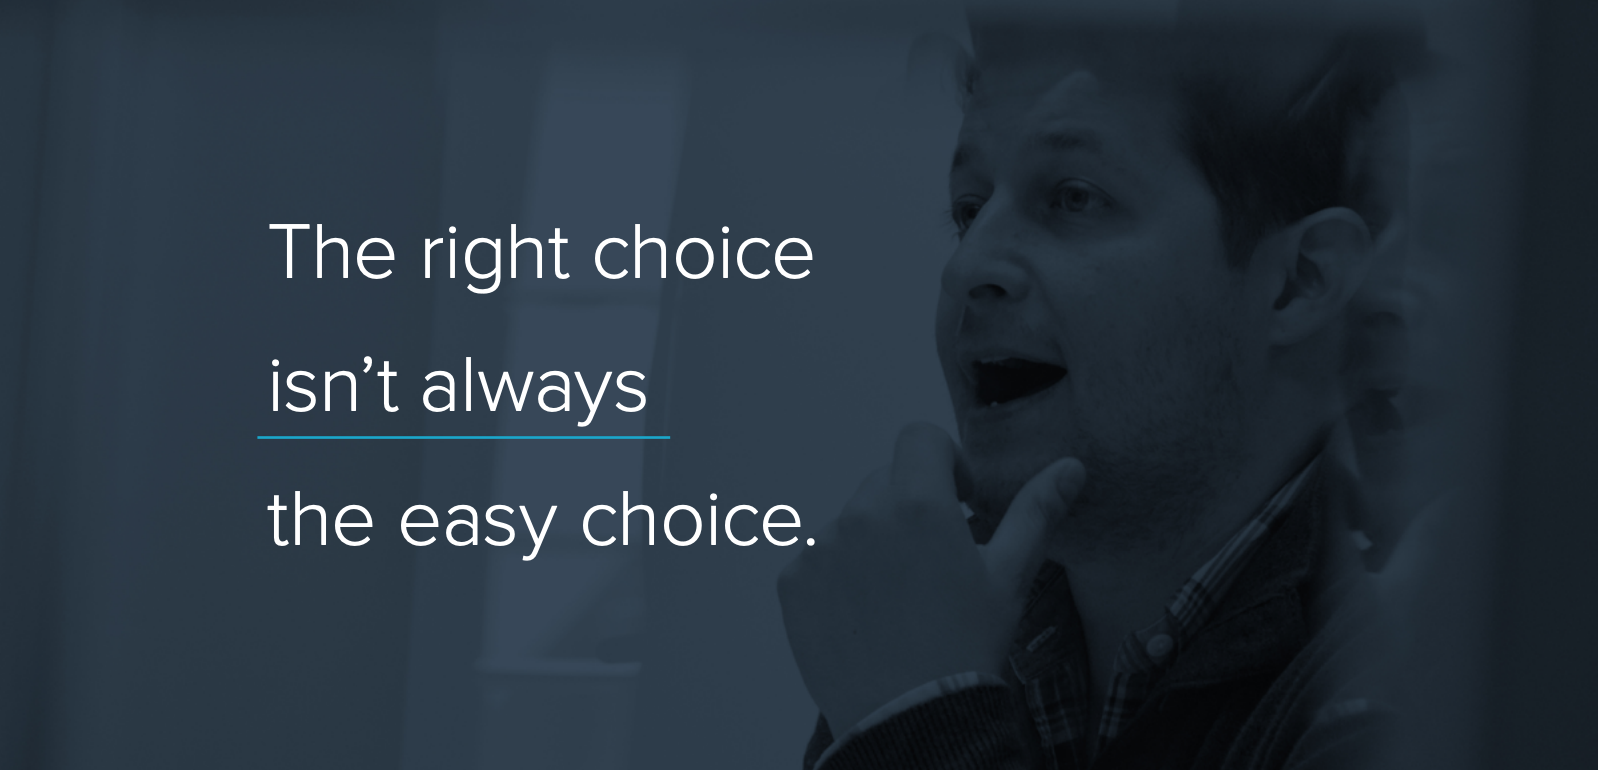 The Right Choice isn't always the easy choice